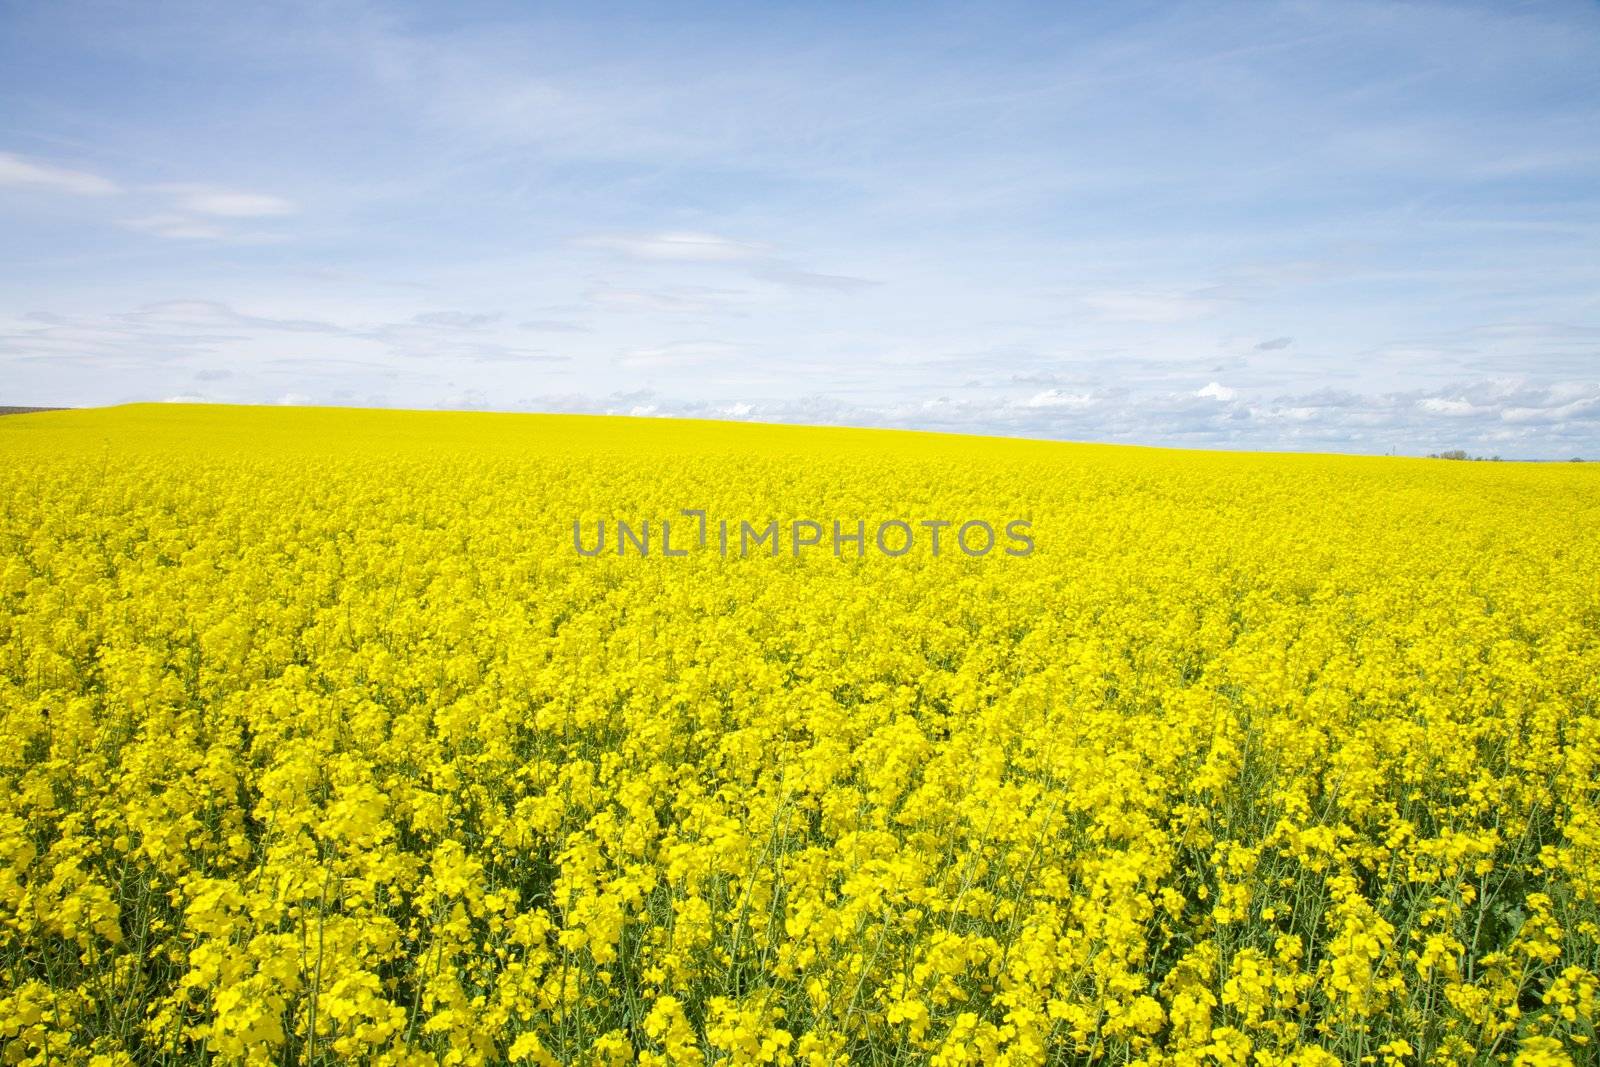 great field full of yellow flowers at Castilla Spain